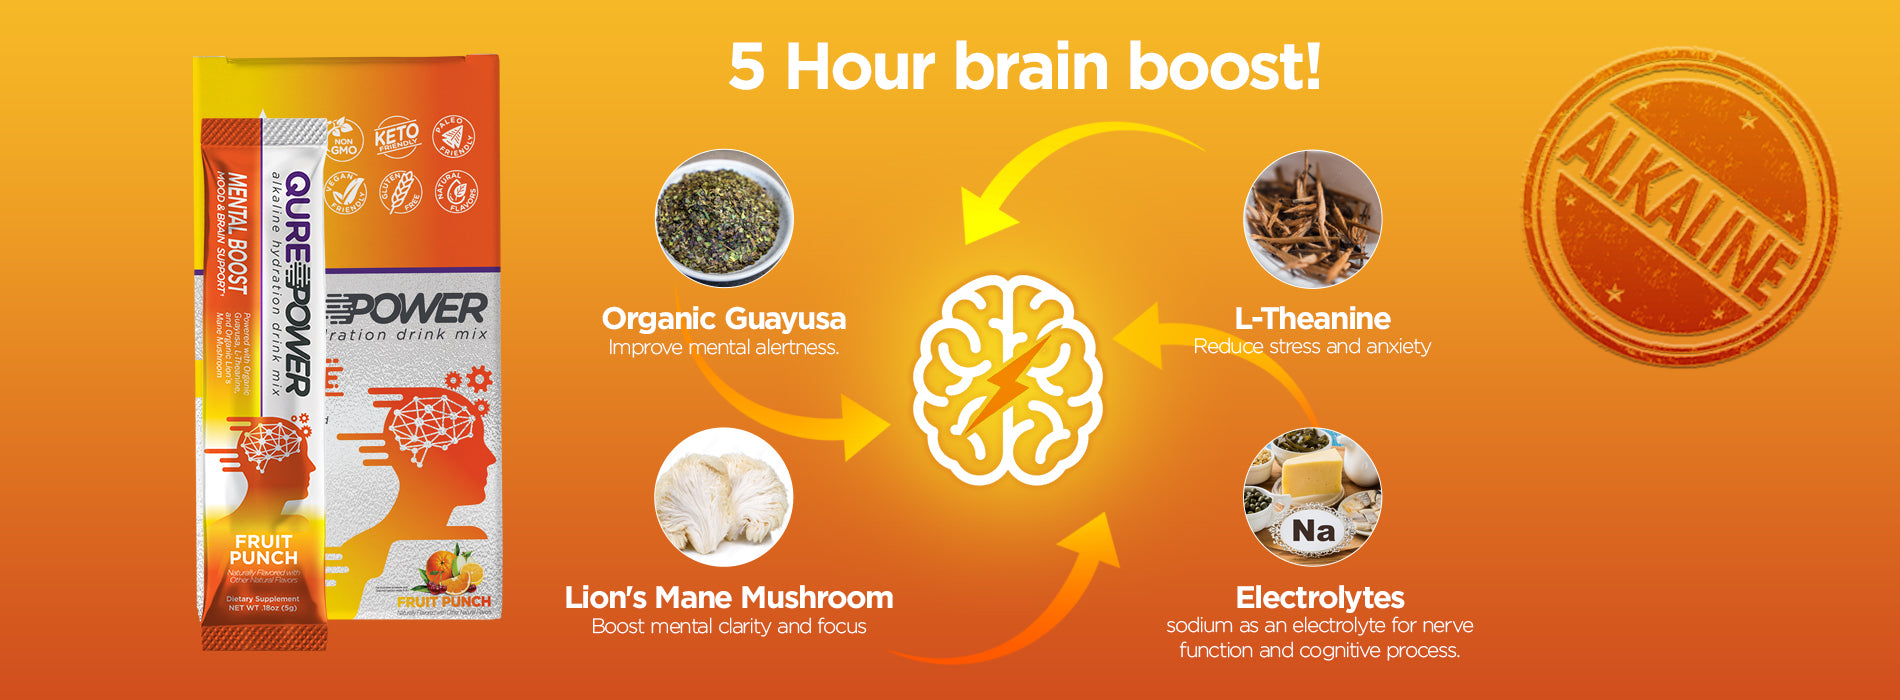 5 hour brain boost